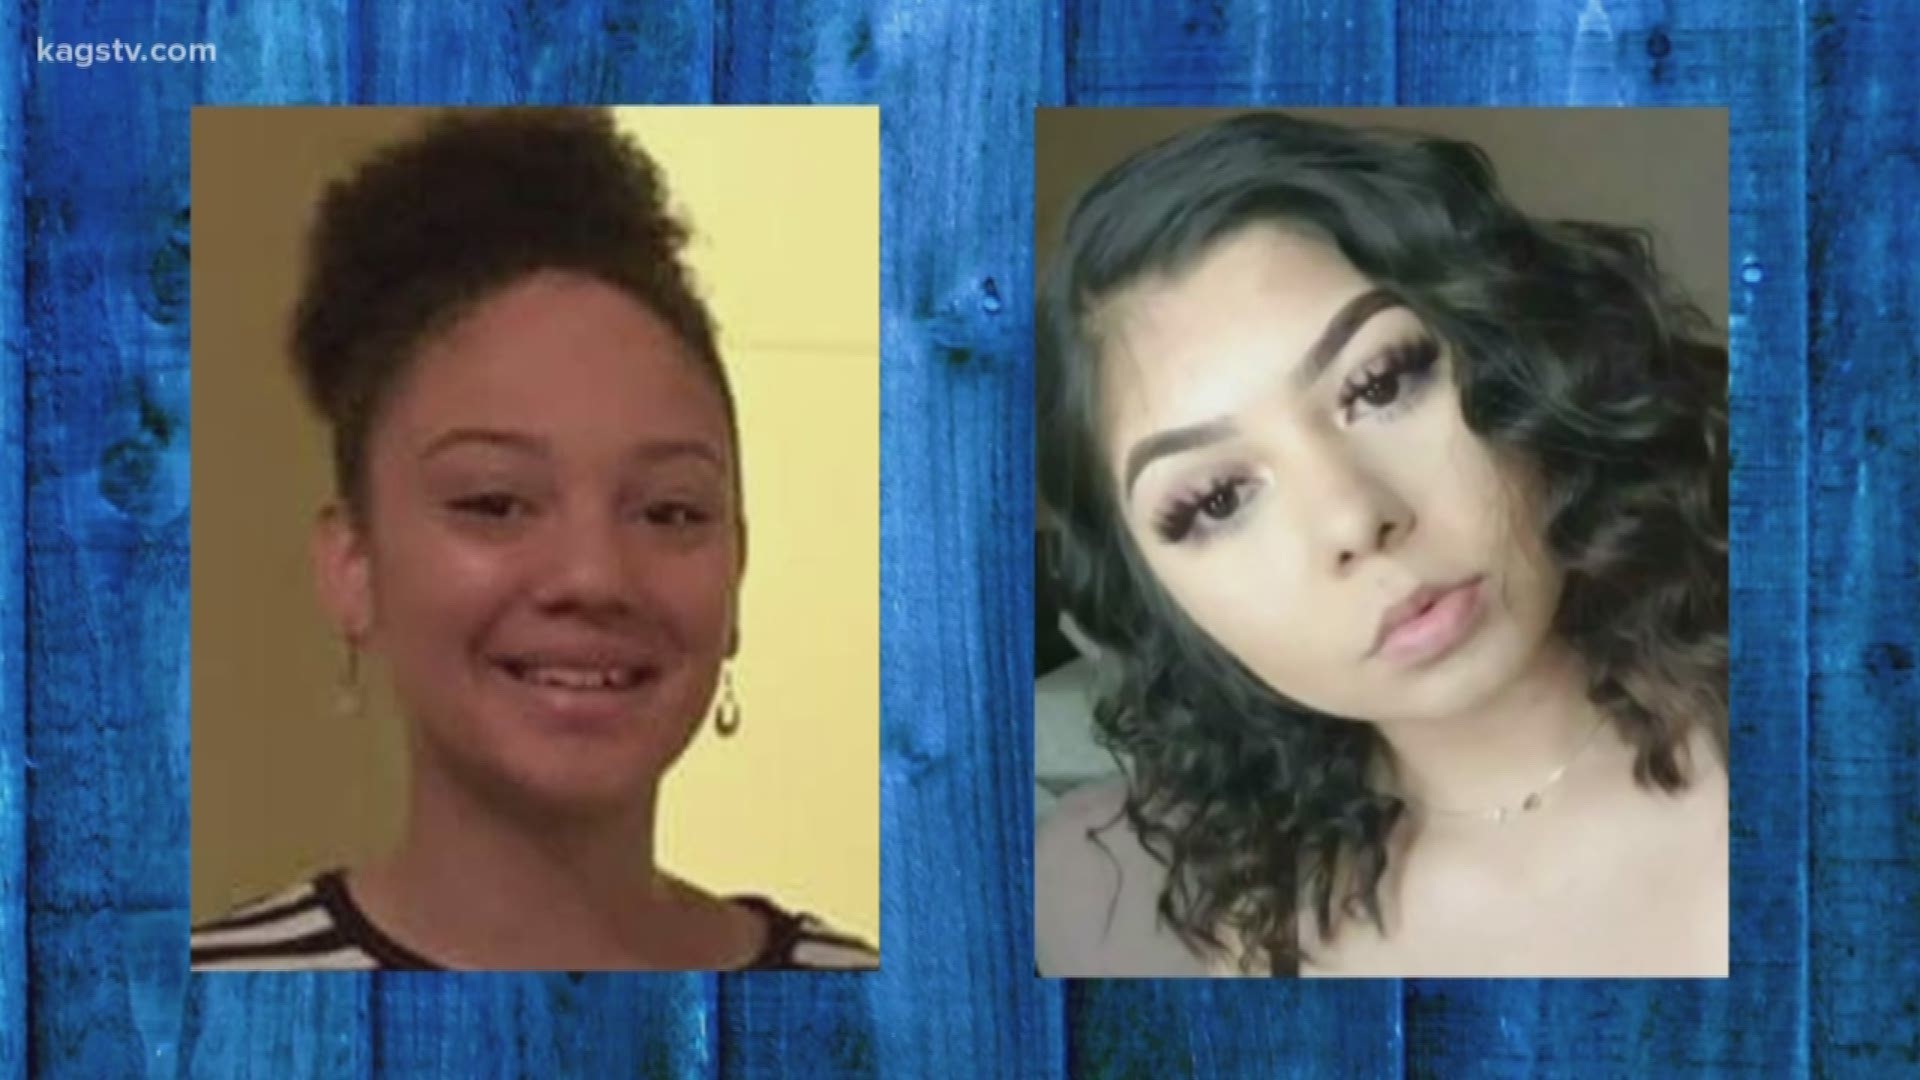 Heard School Porn - College Station police issue alert for missing teen girls | kagstv.com